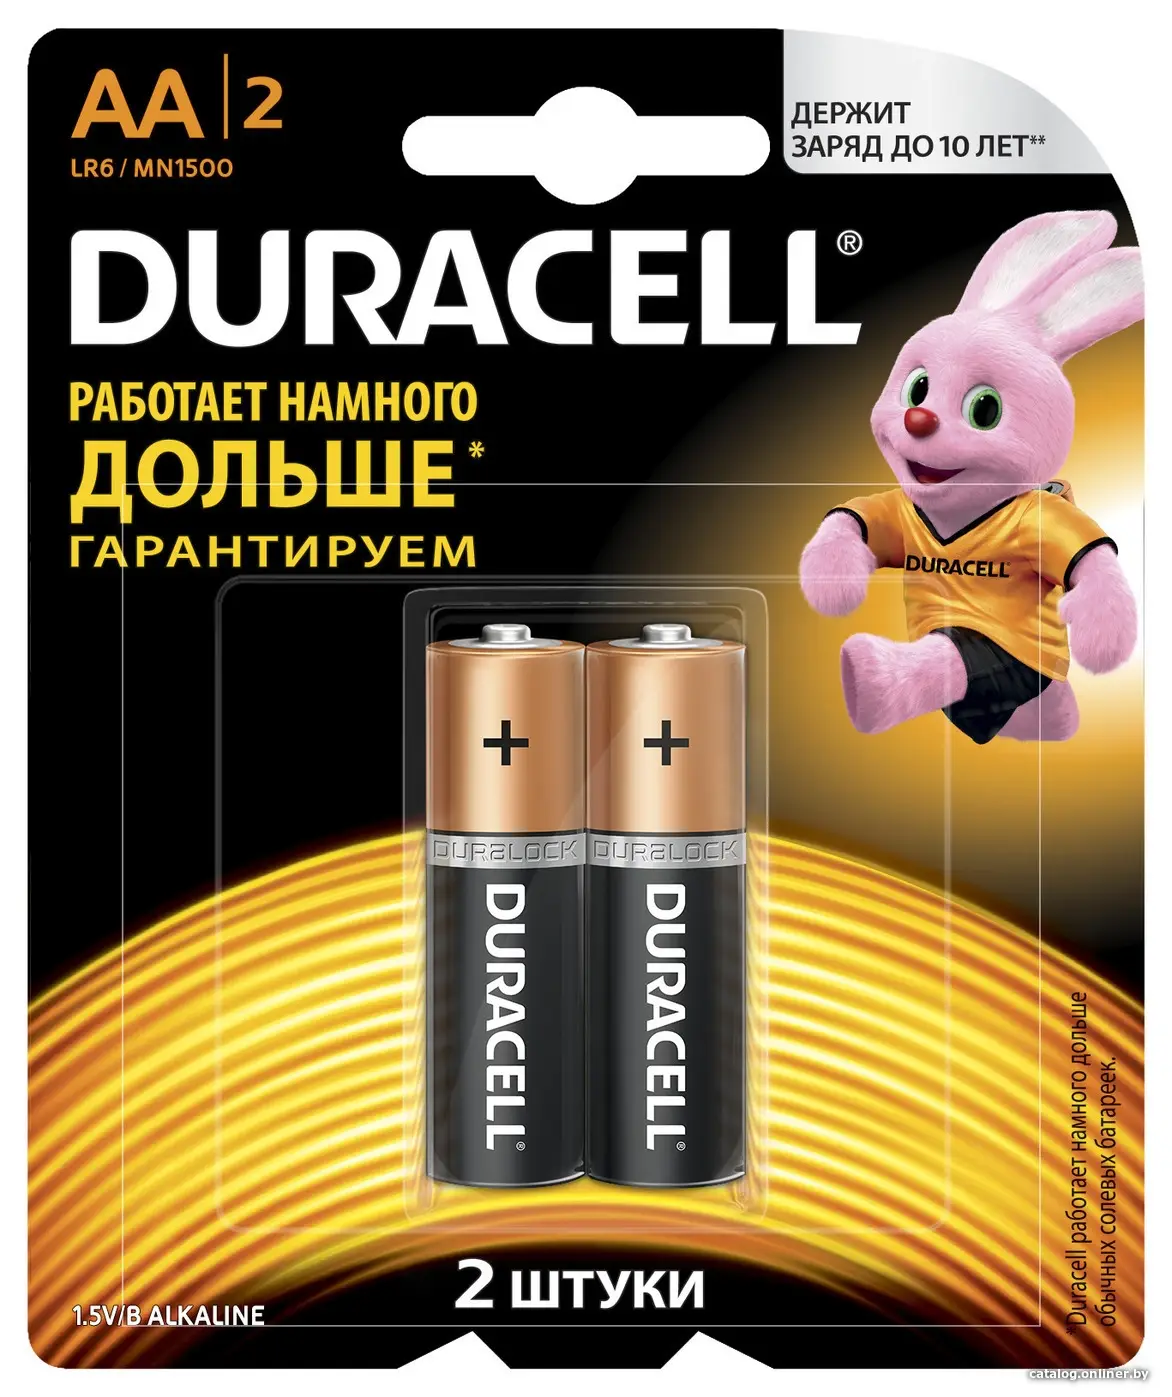 Купить Батарейка DURACELL LR6/MN1500 2BP CN, цена, опт и розница